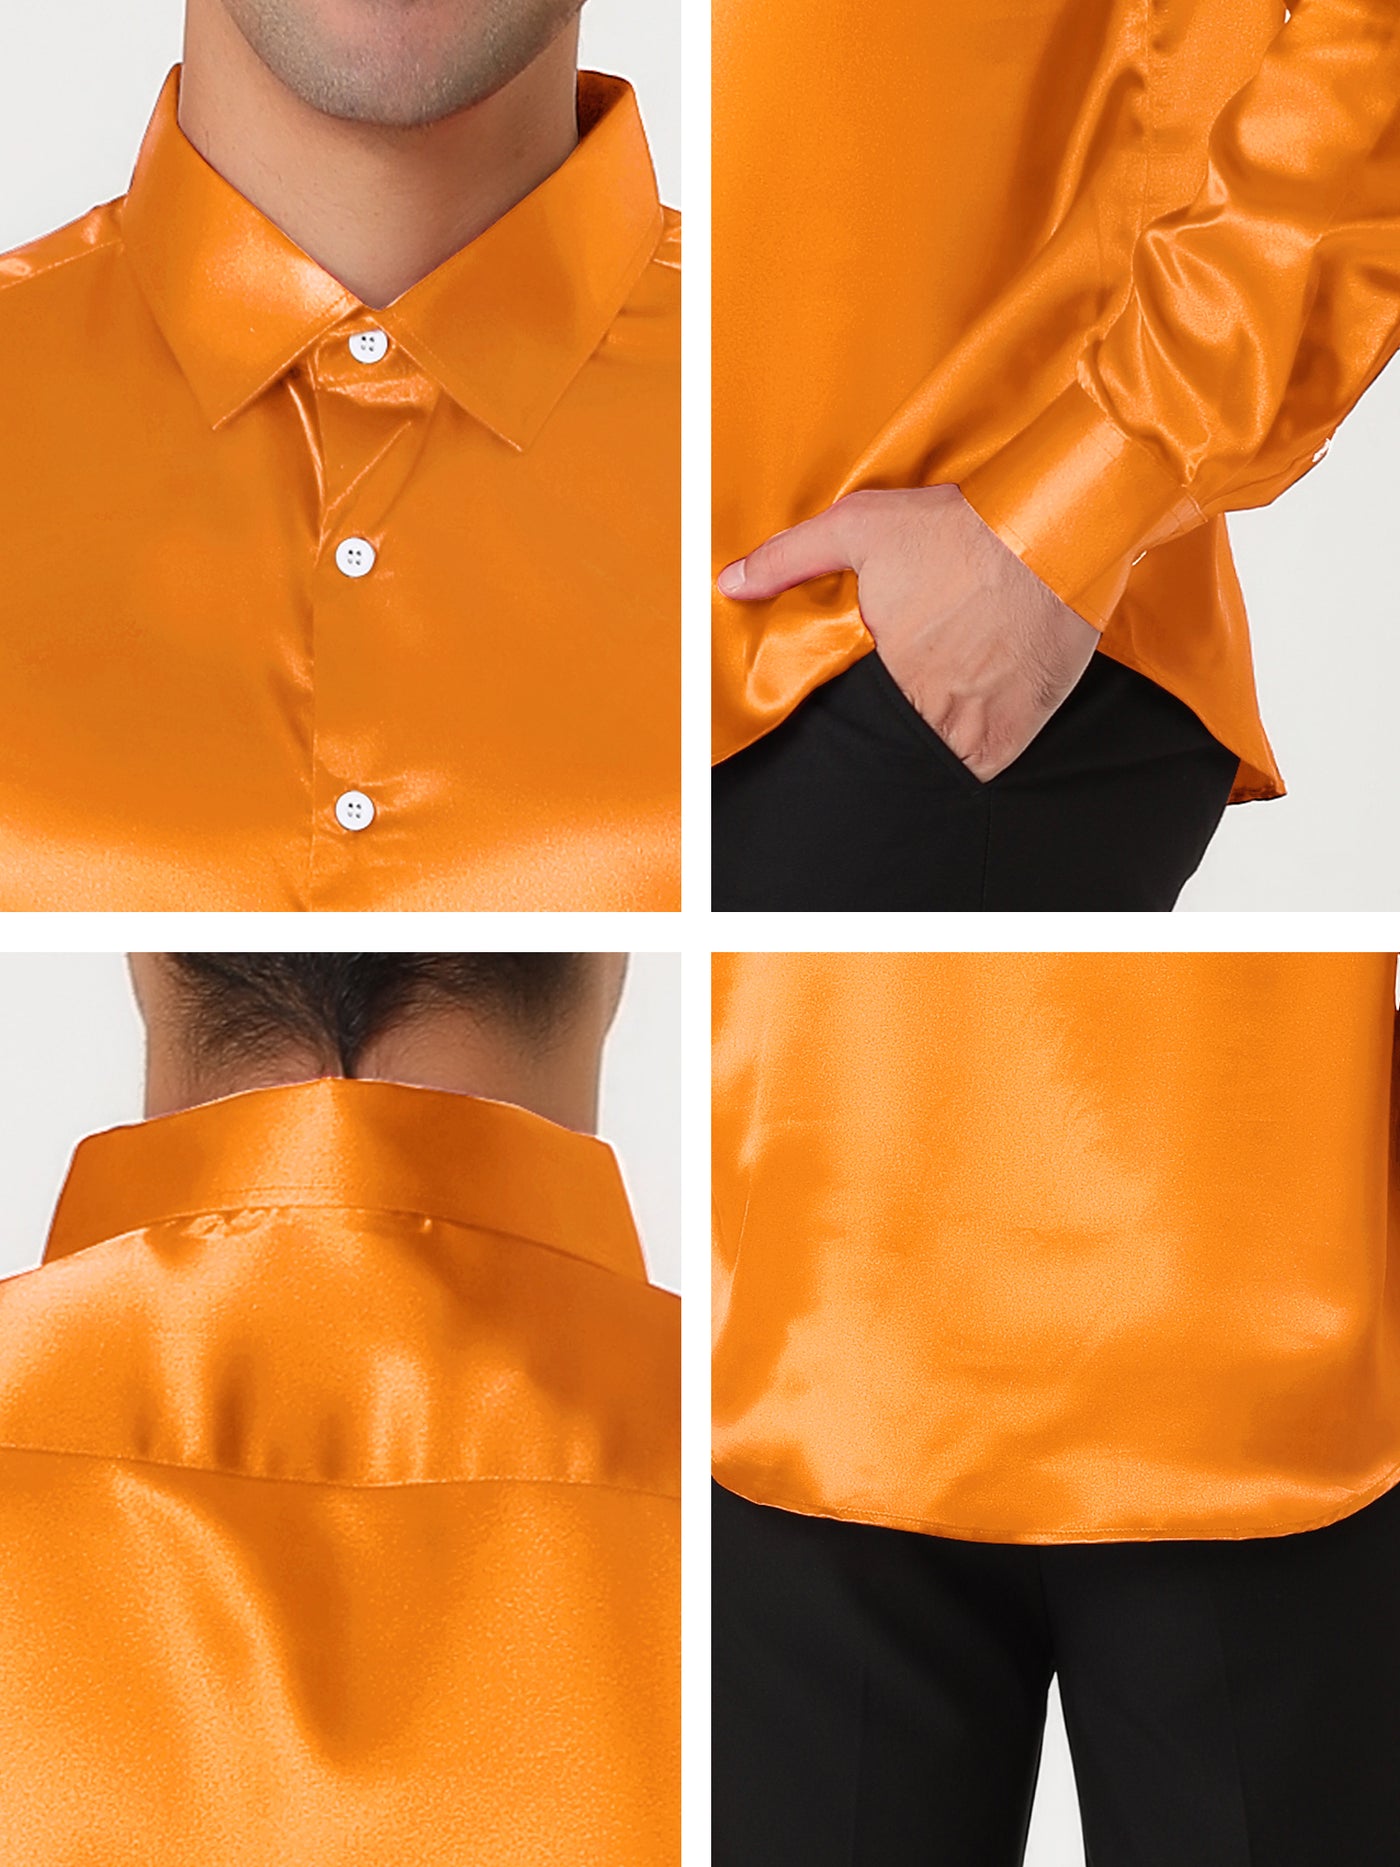 Bublédon Satin Point Collar Long Sleeve Button Dress Shirts